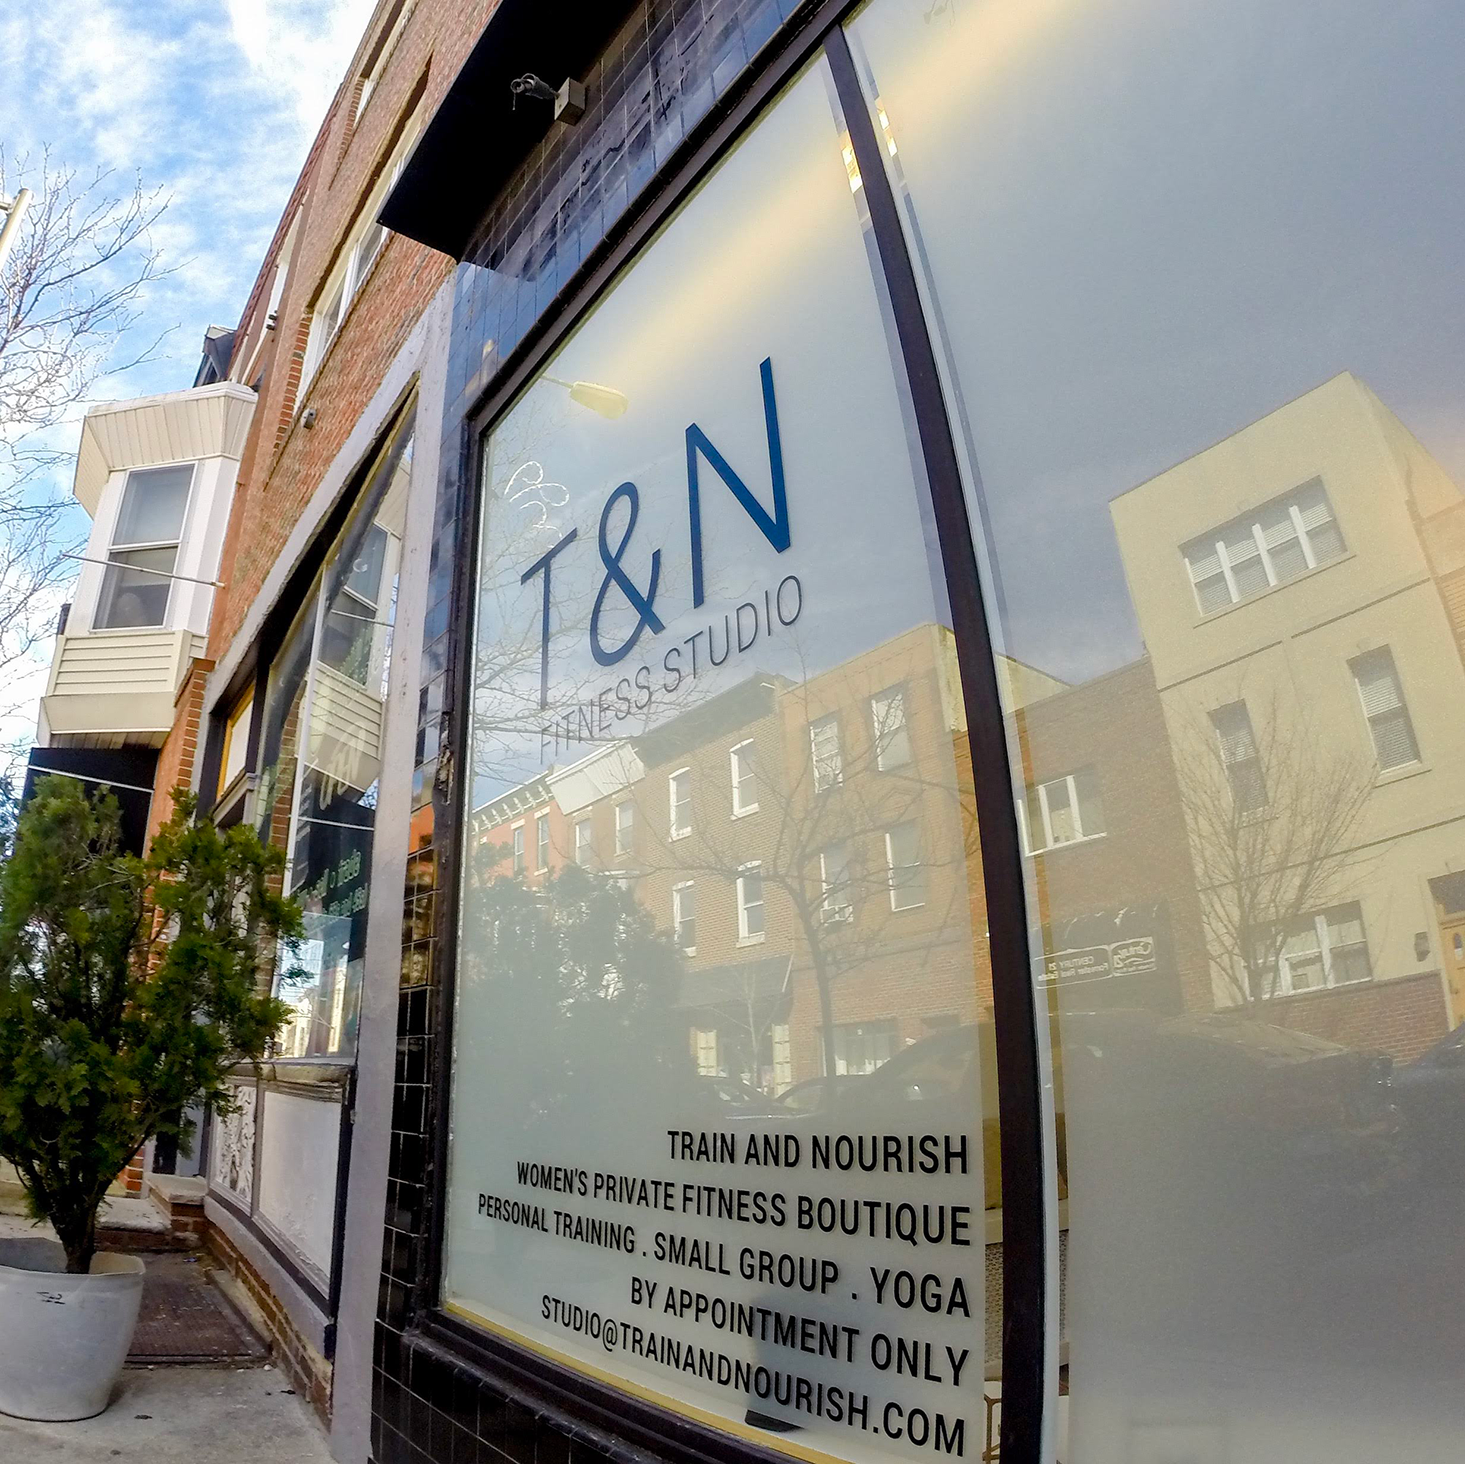 T & n boutique on the corner of a street, offering women's fitness apparel in Philadelphia.